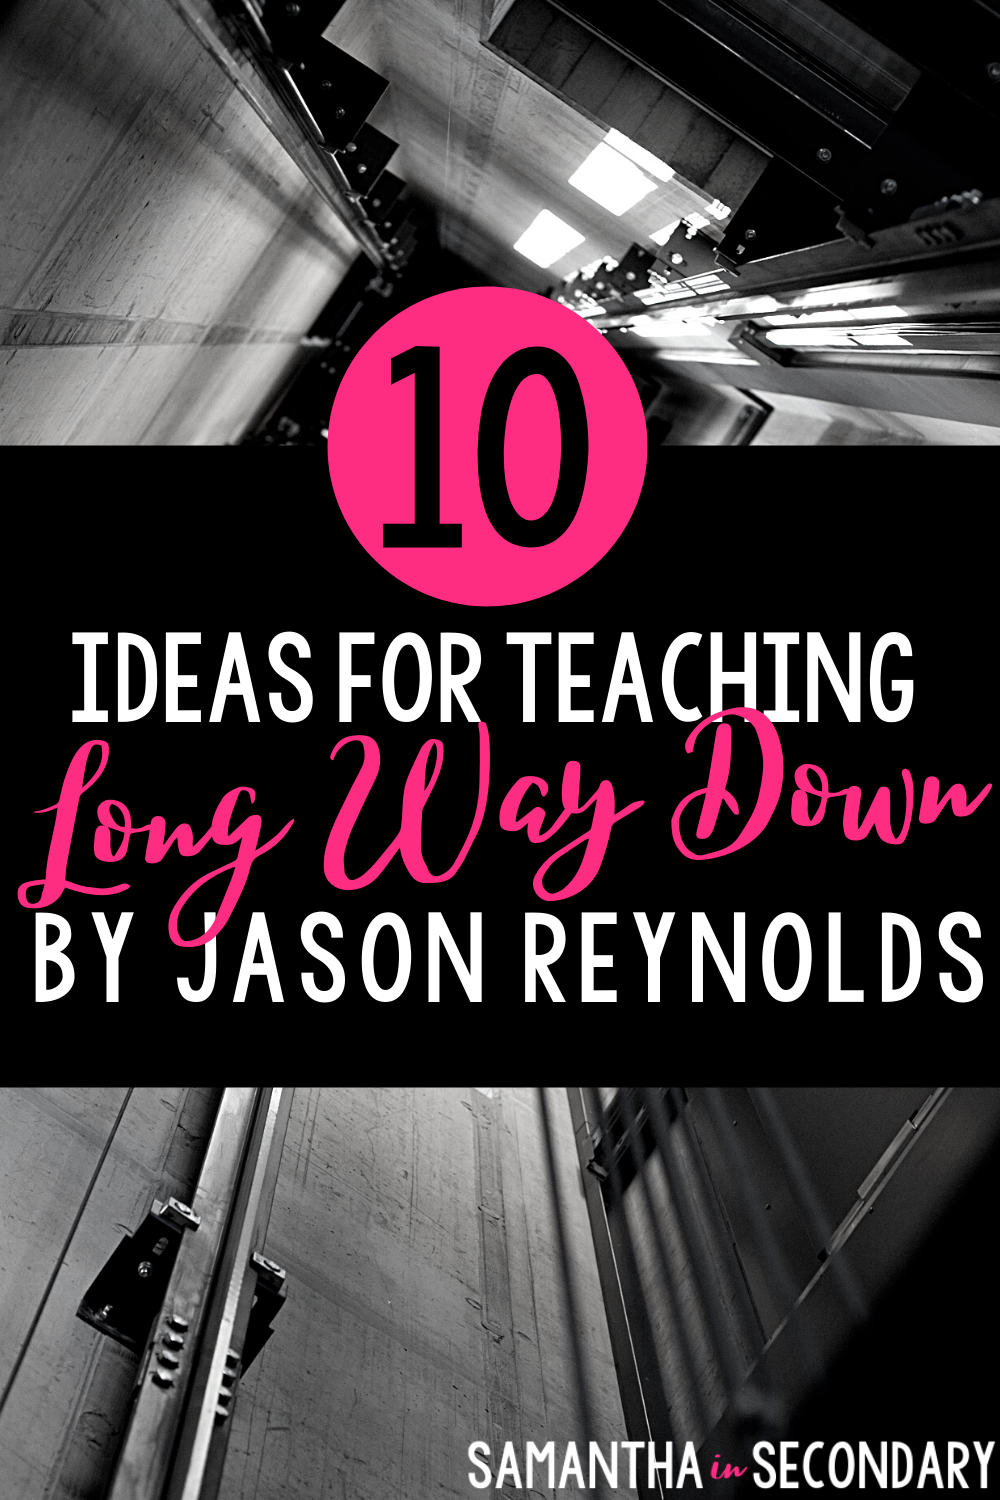 10 teaching ideas for Long Way Down by Jason Reynolds